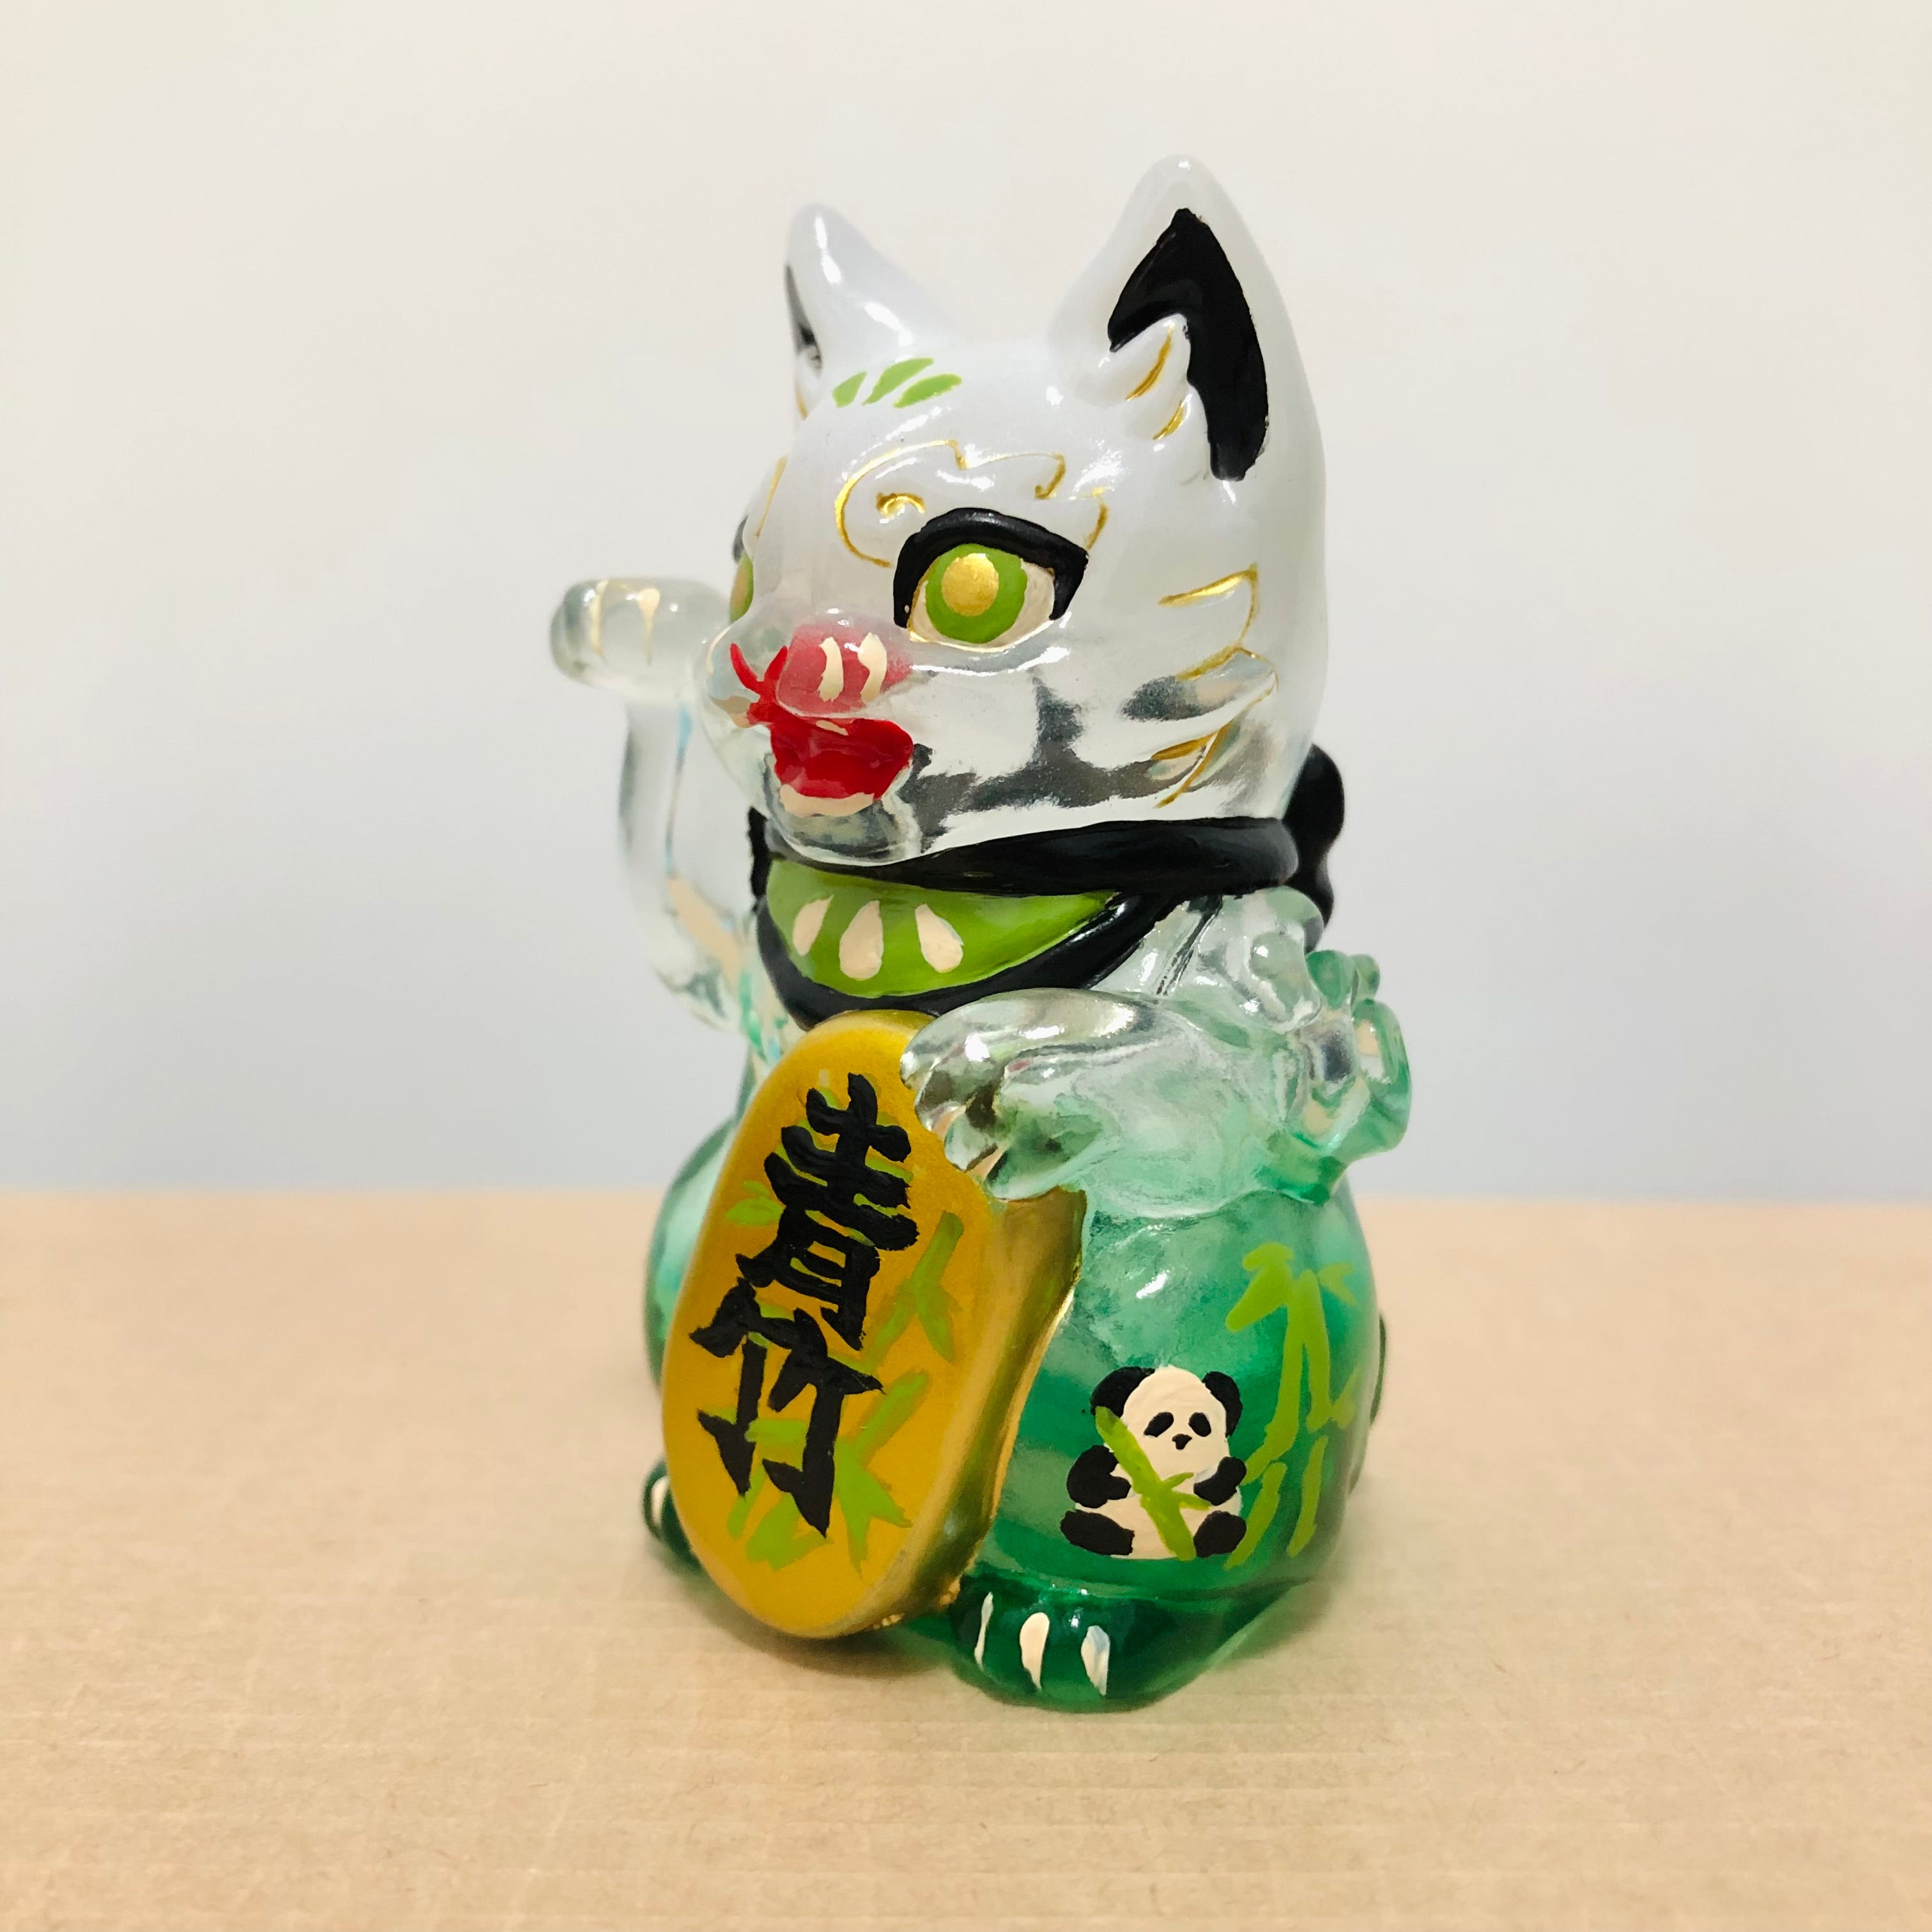 Bake Lucky Cat - Bamboo by Genkosha - Preorder